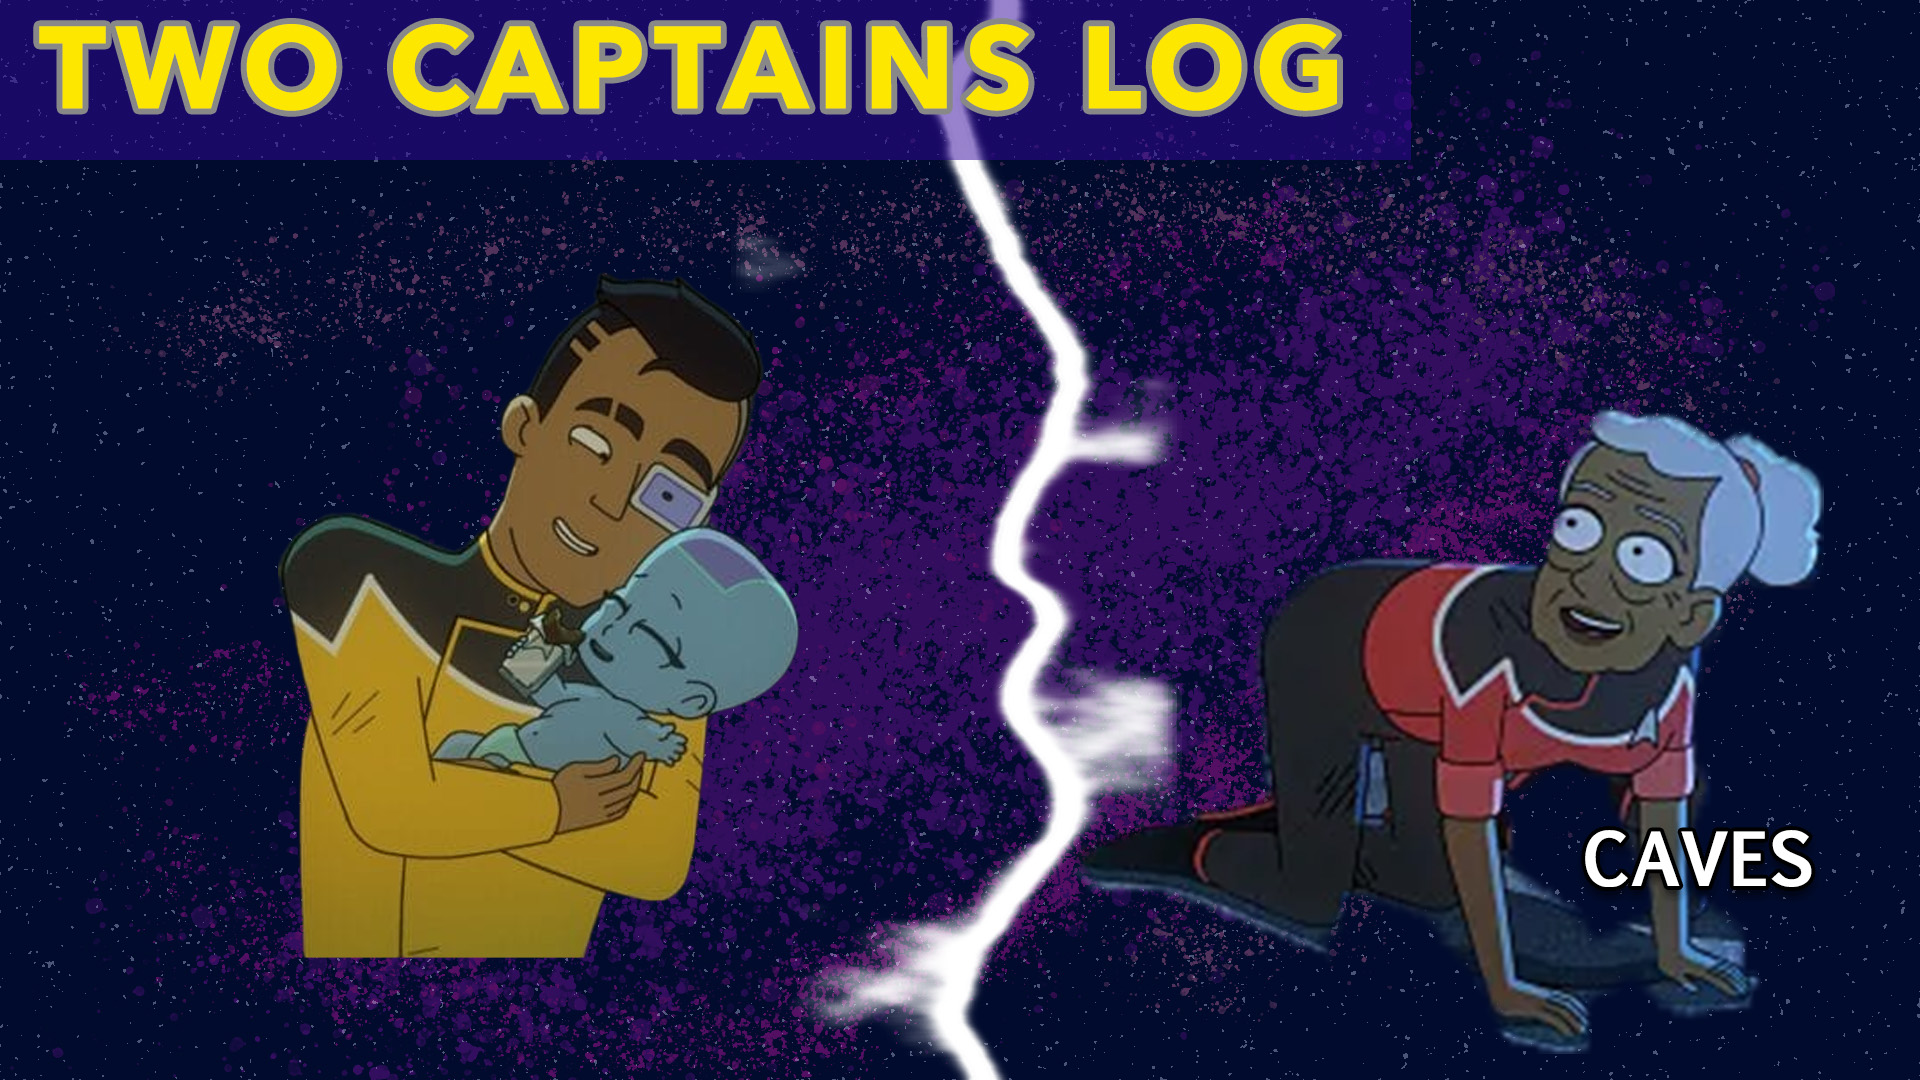 Two Captains Log: “Star Trek: Lower Decks” S4E8 “Caves” Review